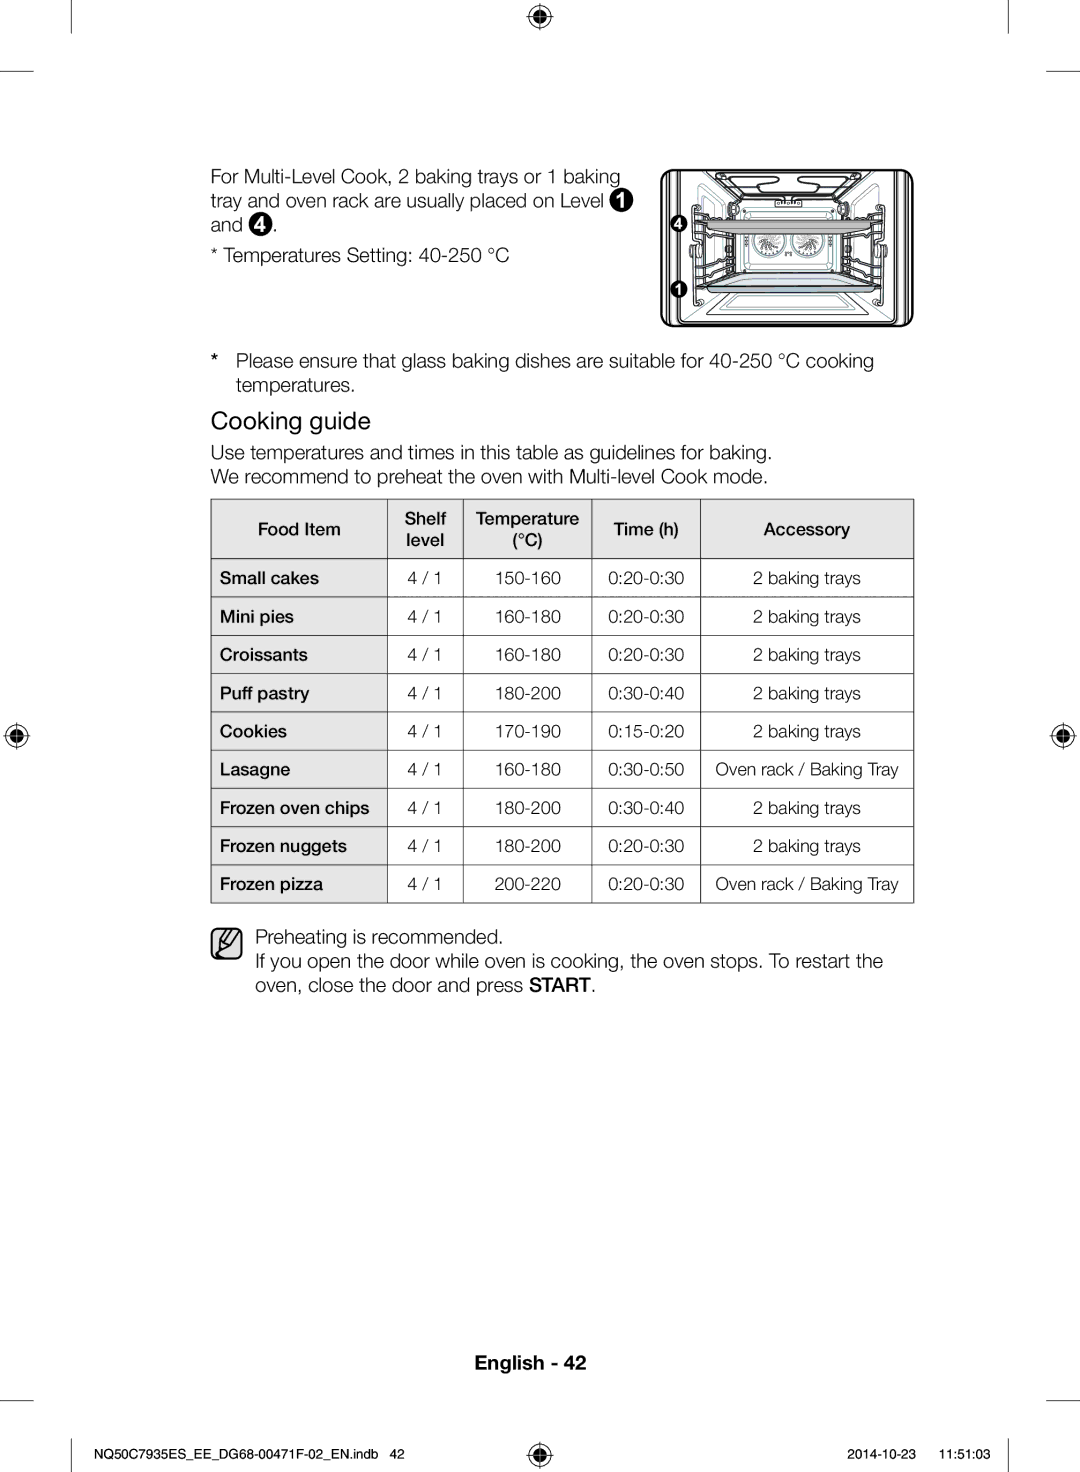 Samsung NQ50C7935ES/EE manual Mini pies 160-180 020-030 